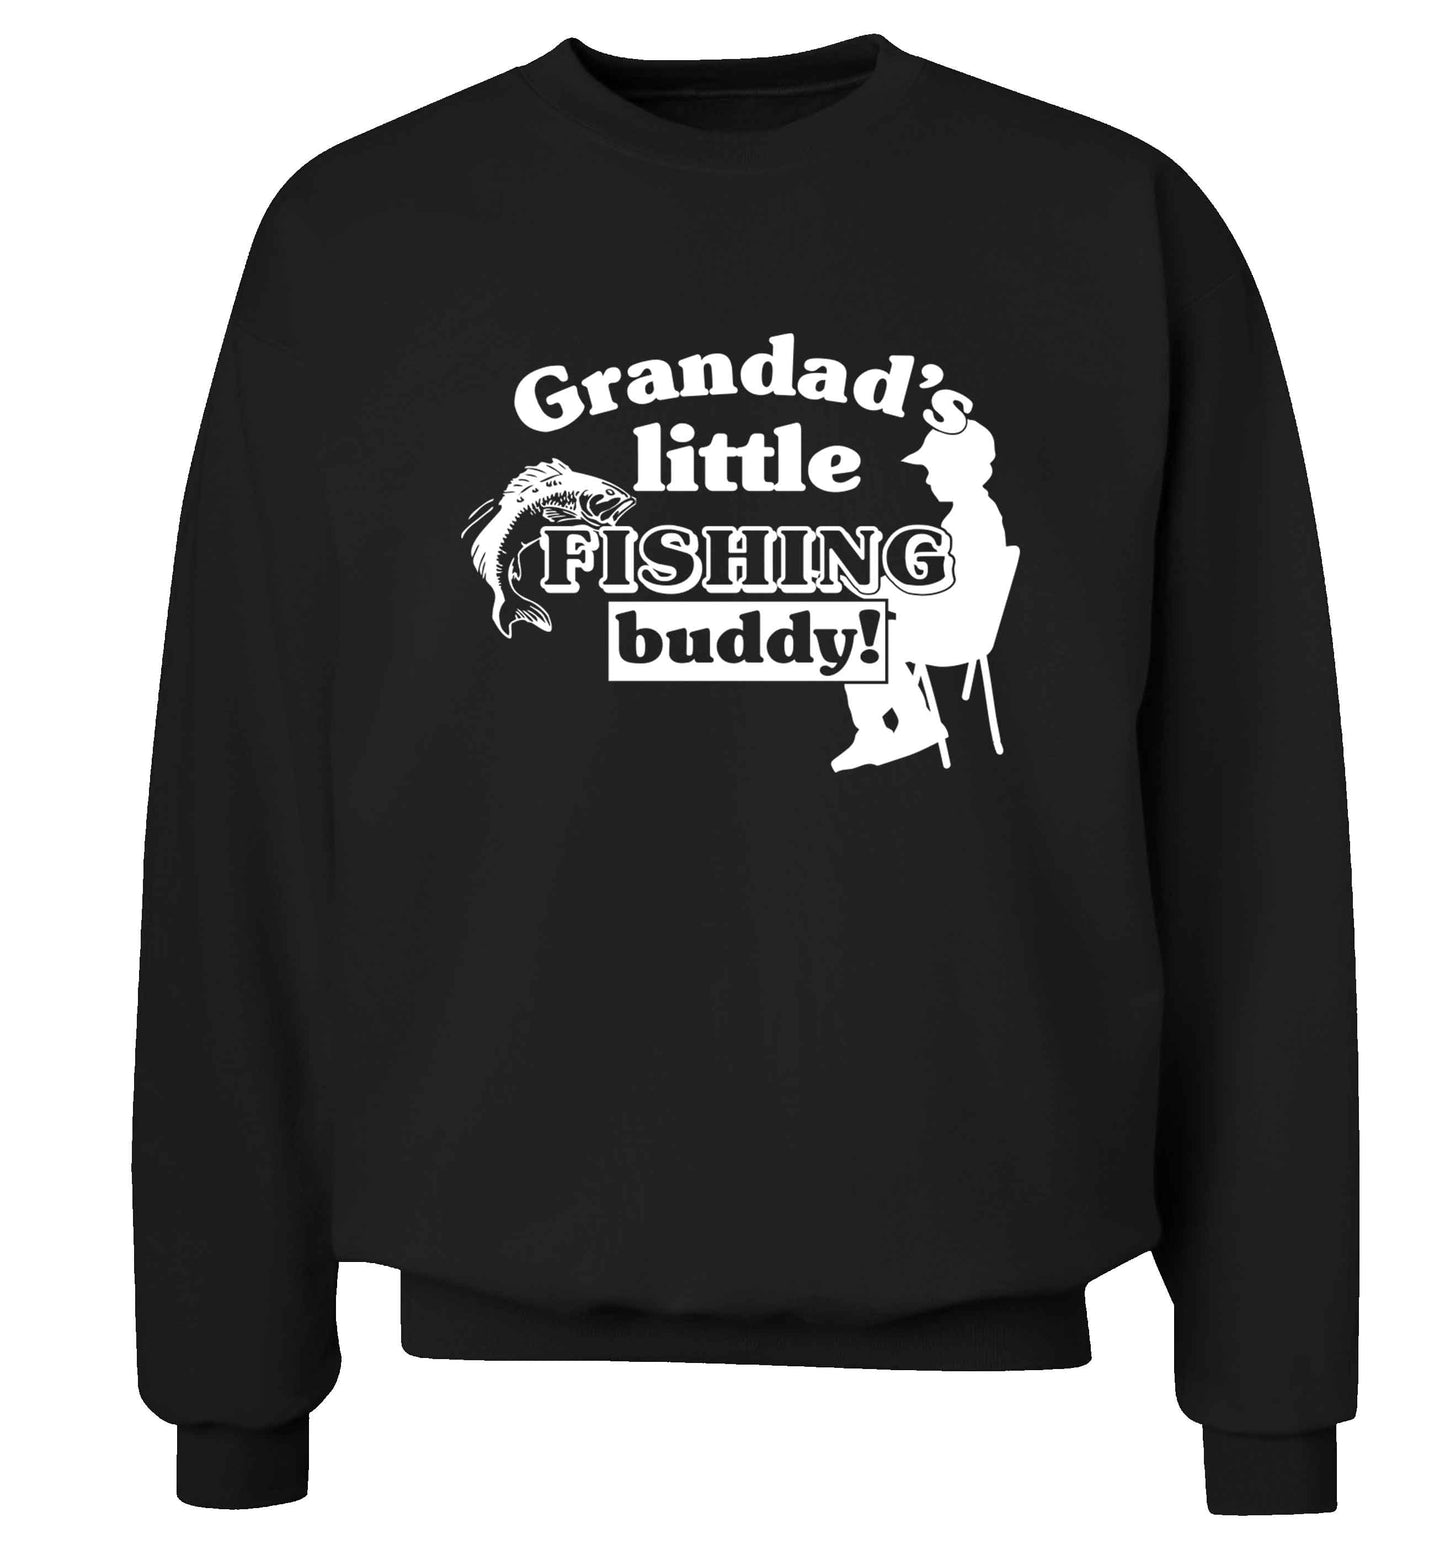 Grandad's little fishing buddy! Adult's unisex black Sweater 2XL